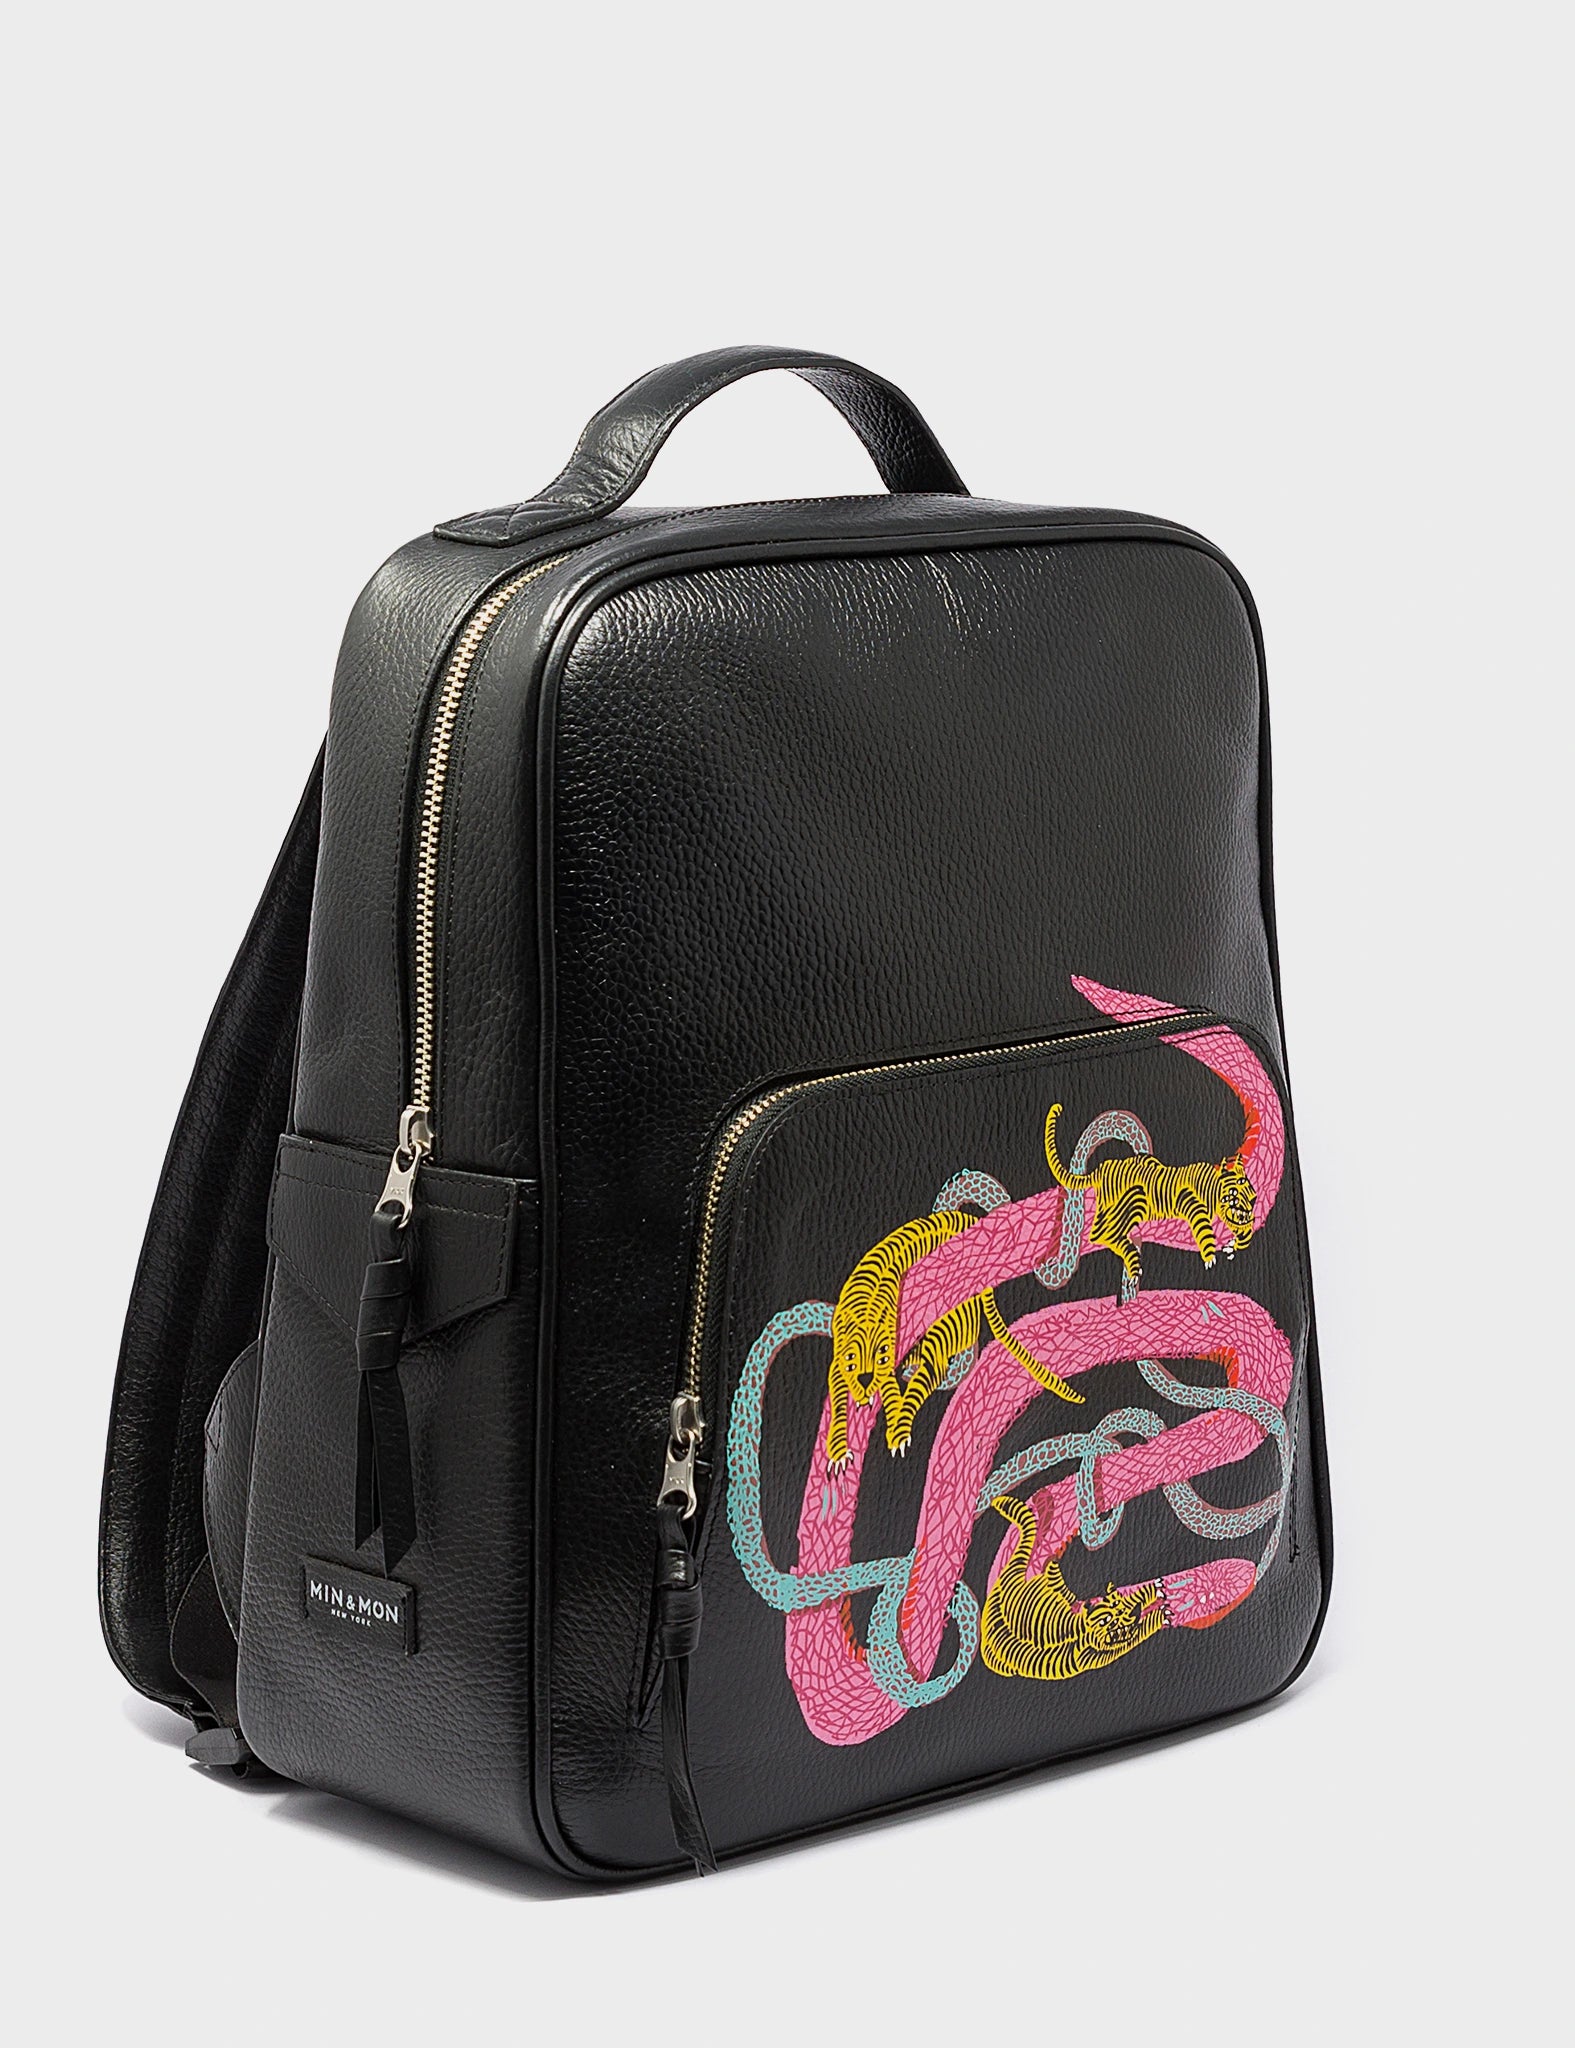 Black Leather Backpack Medium - Tiger and Snake Print